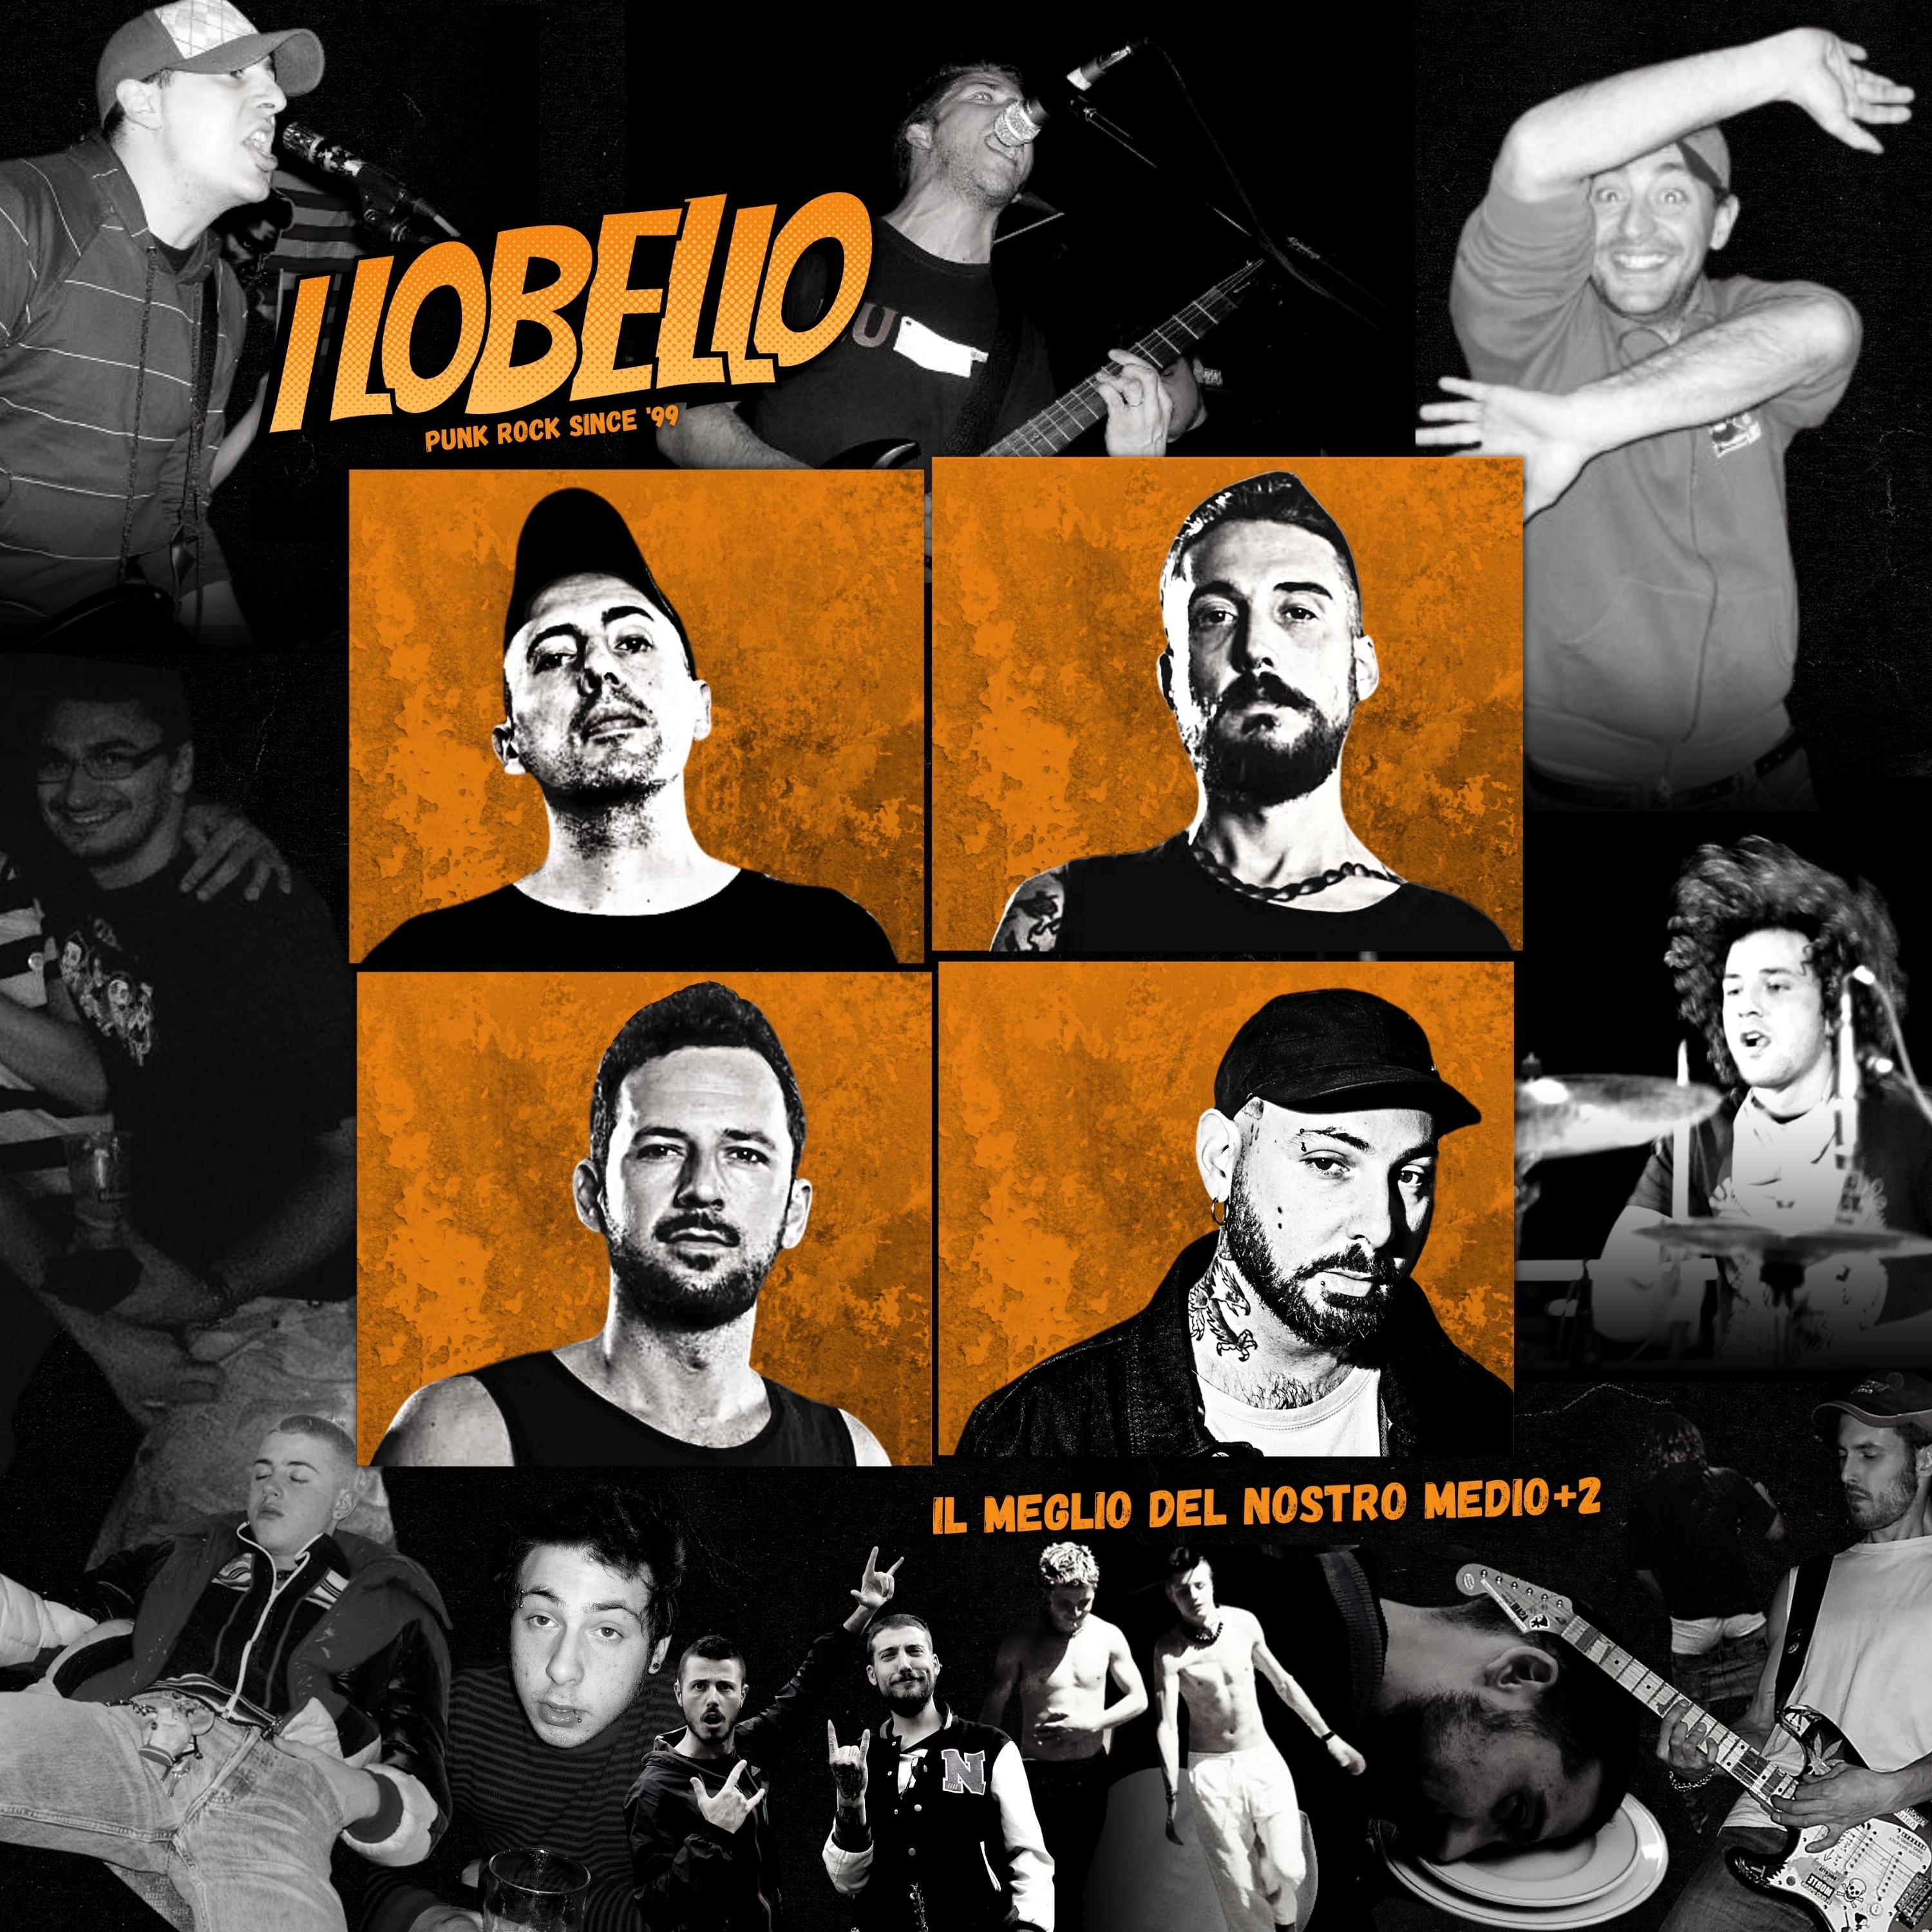 I Lobello ( Punk rock since '99" ) Spotify  thumbnail